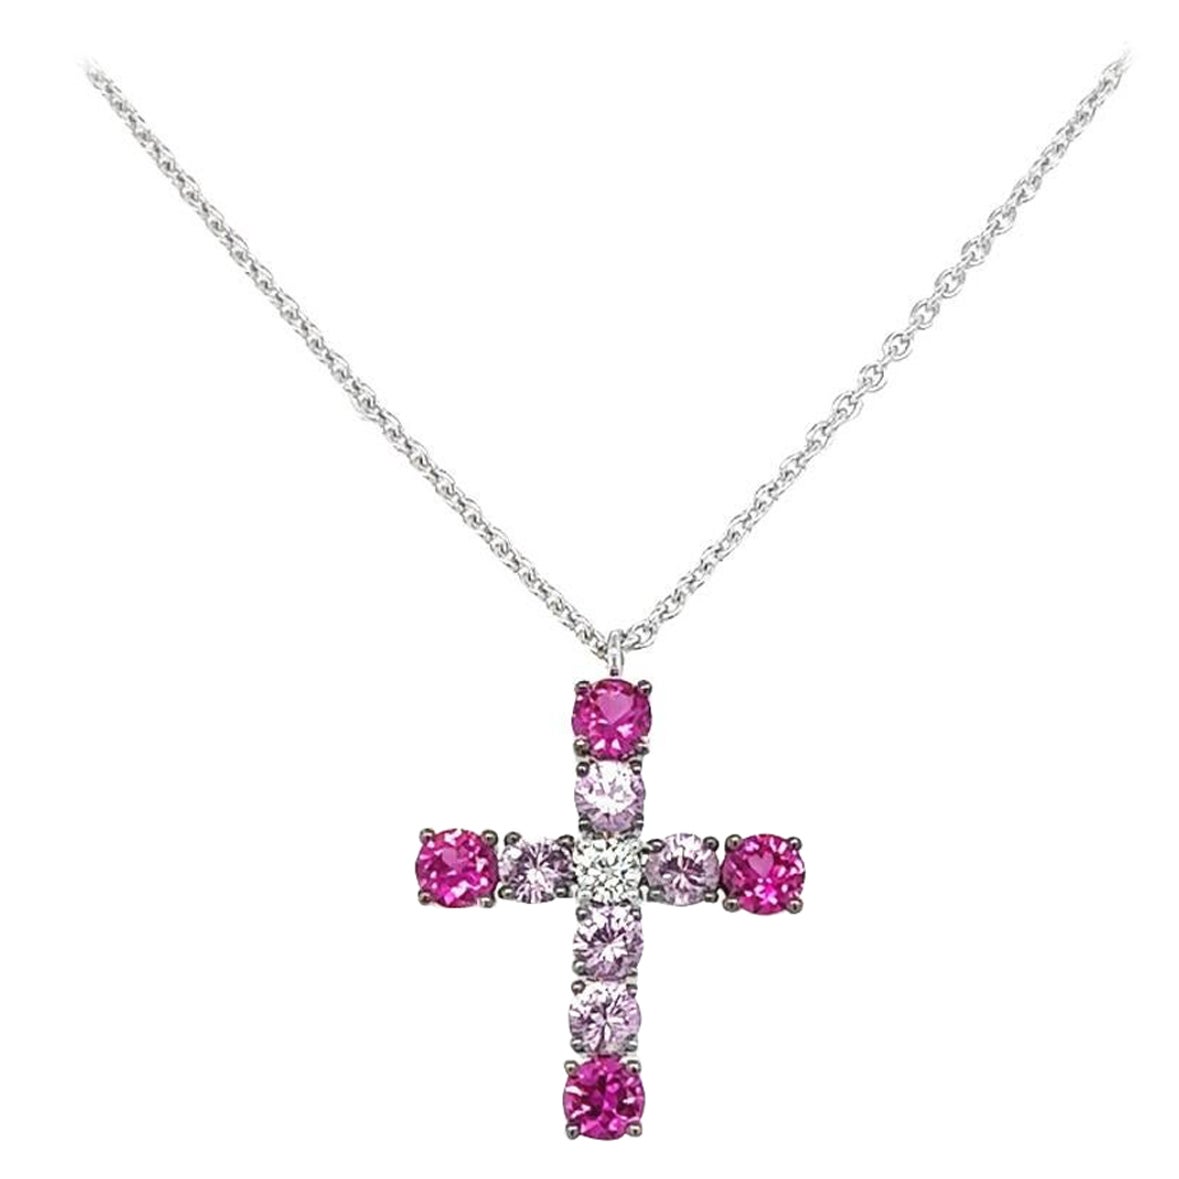 Cross pendant necklace For Sale